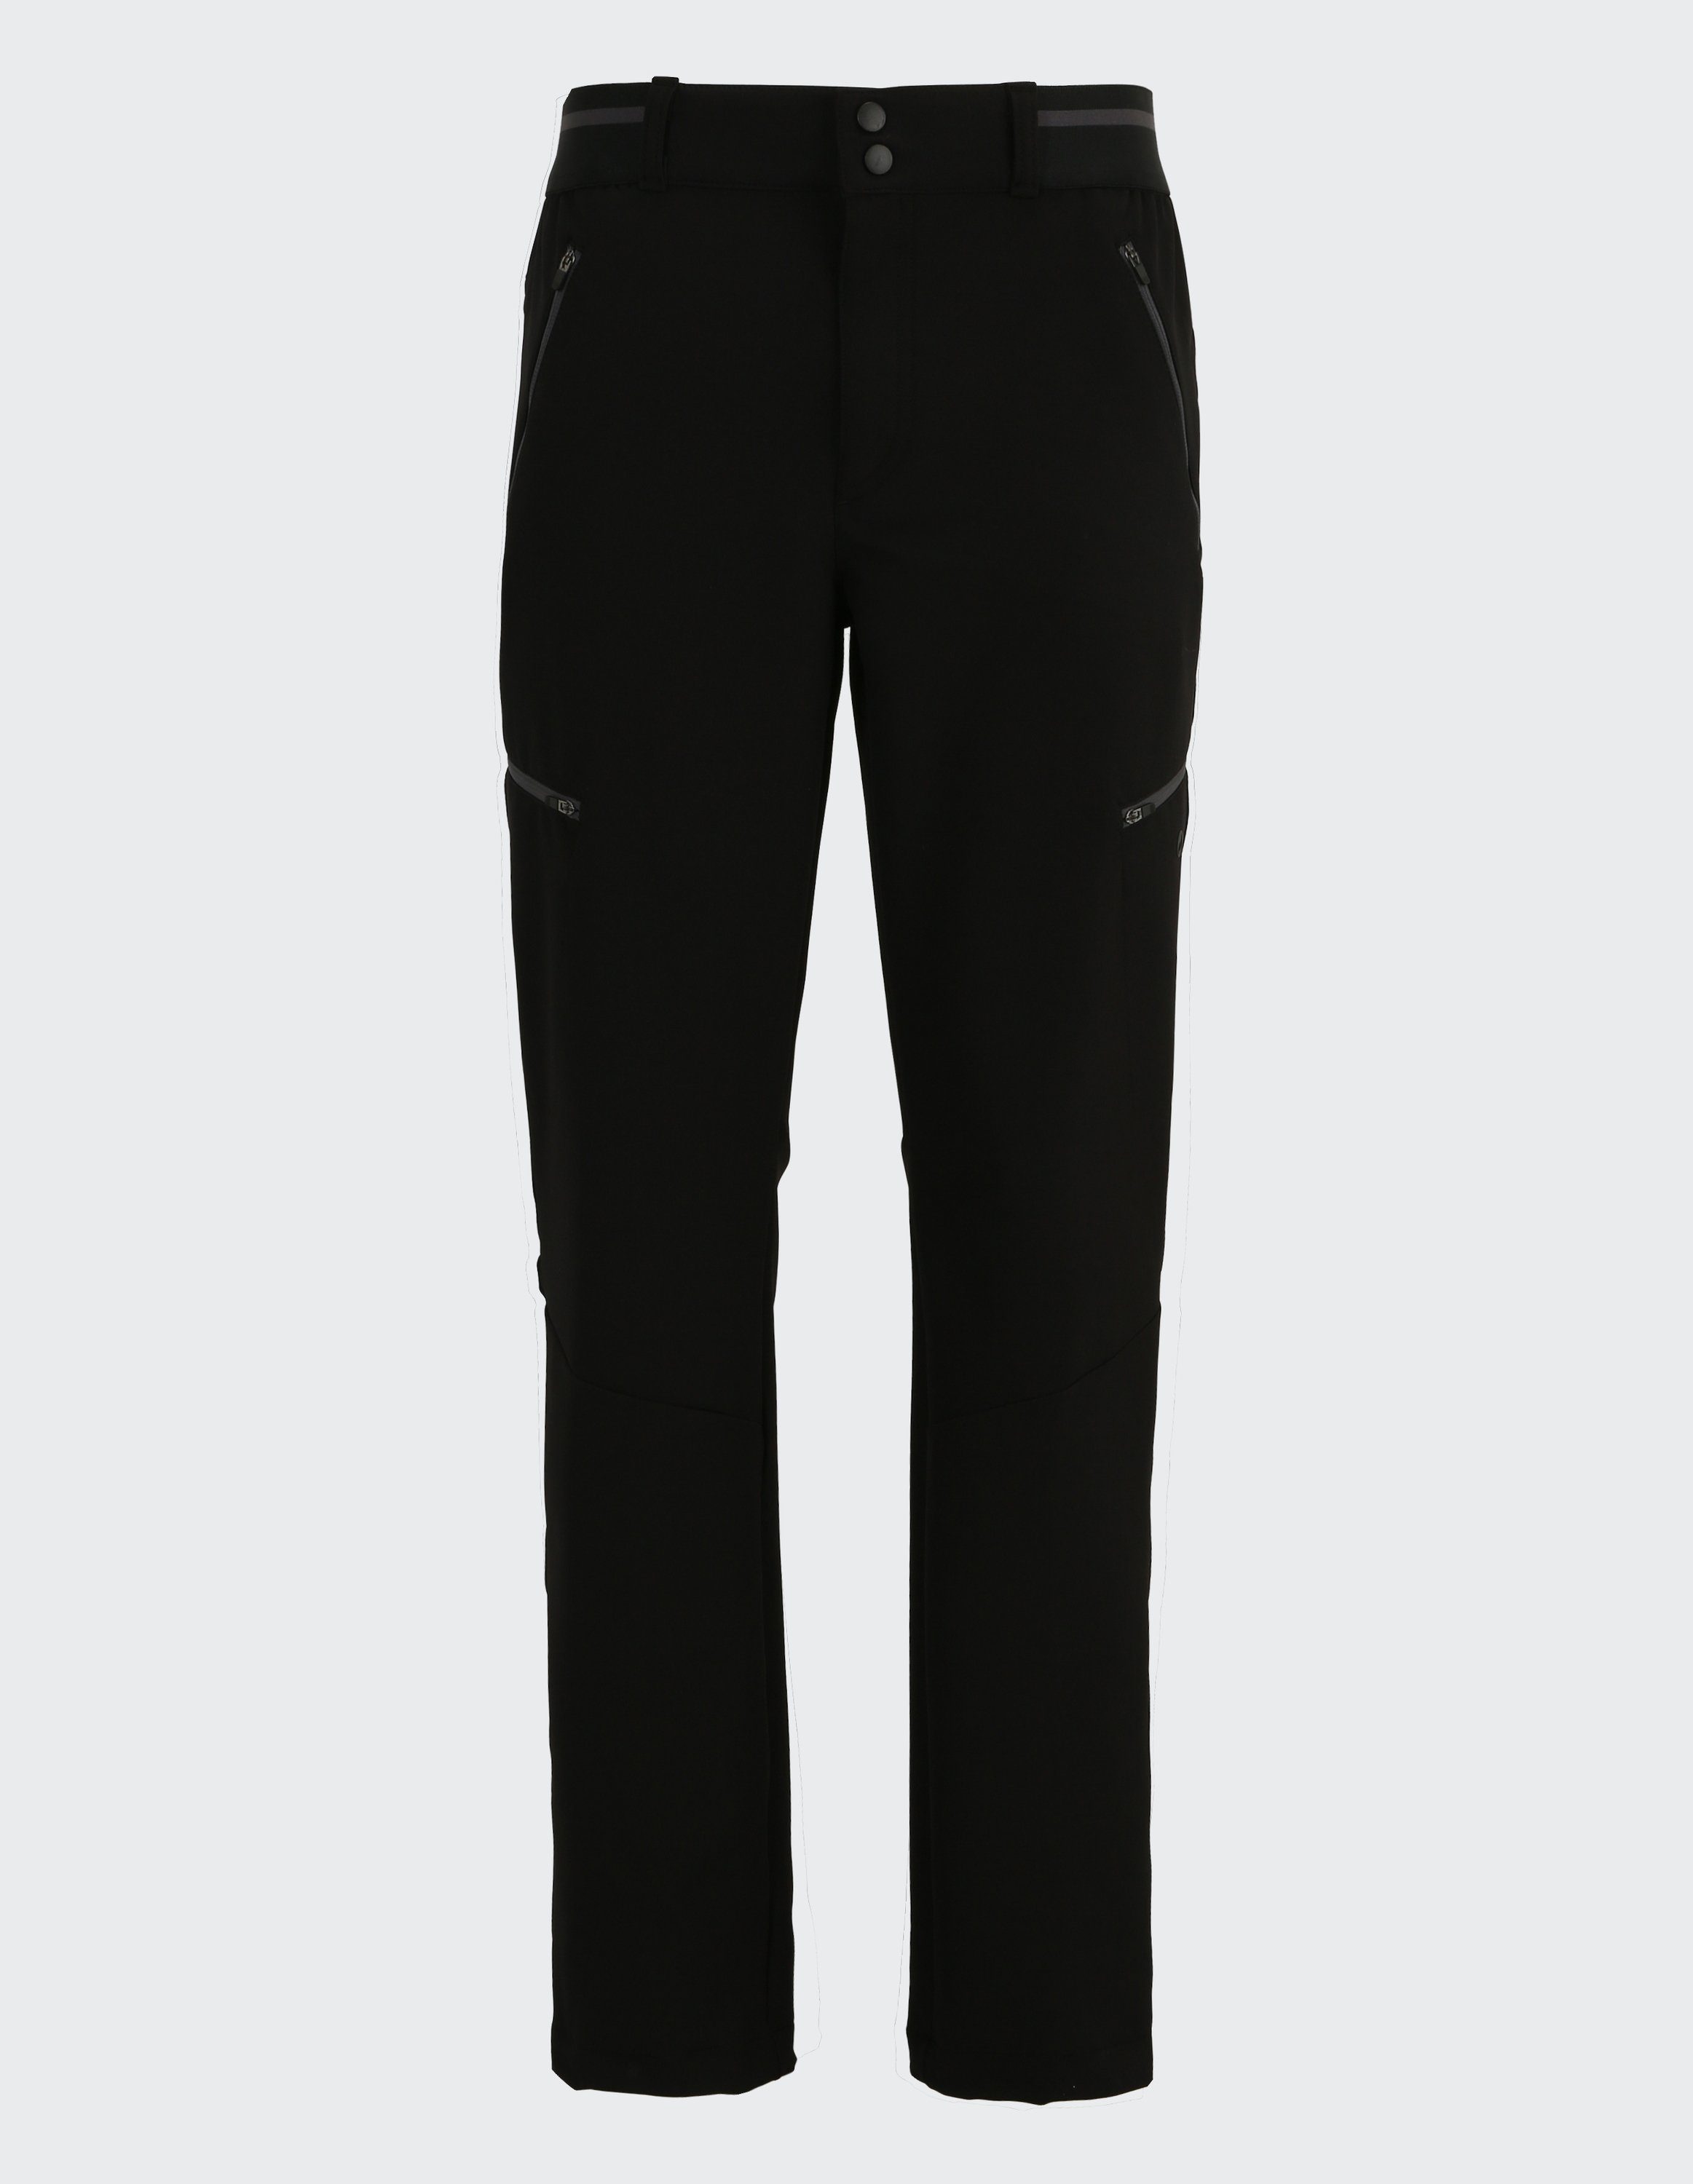 Hot-Sportswear Sporthose Hose Whistler black